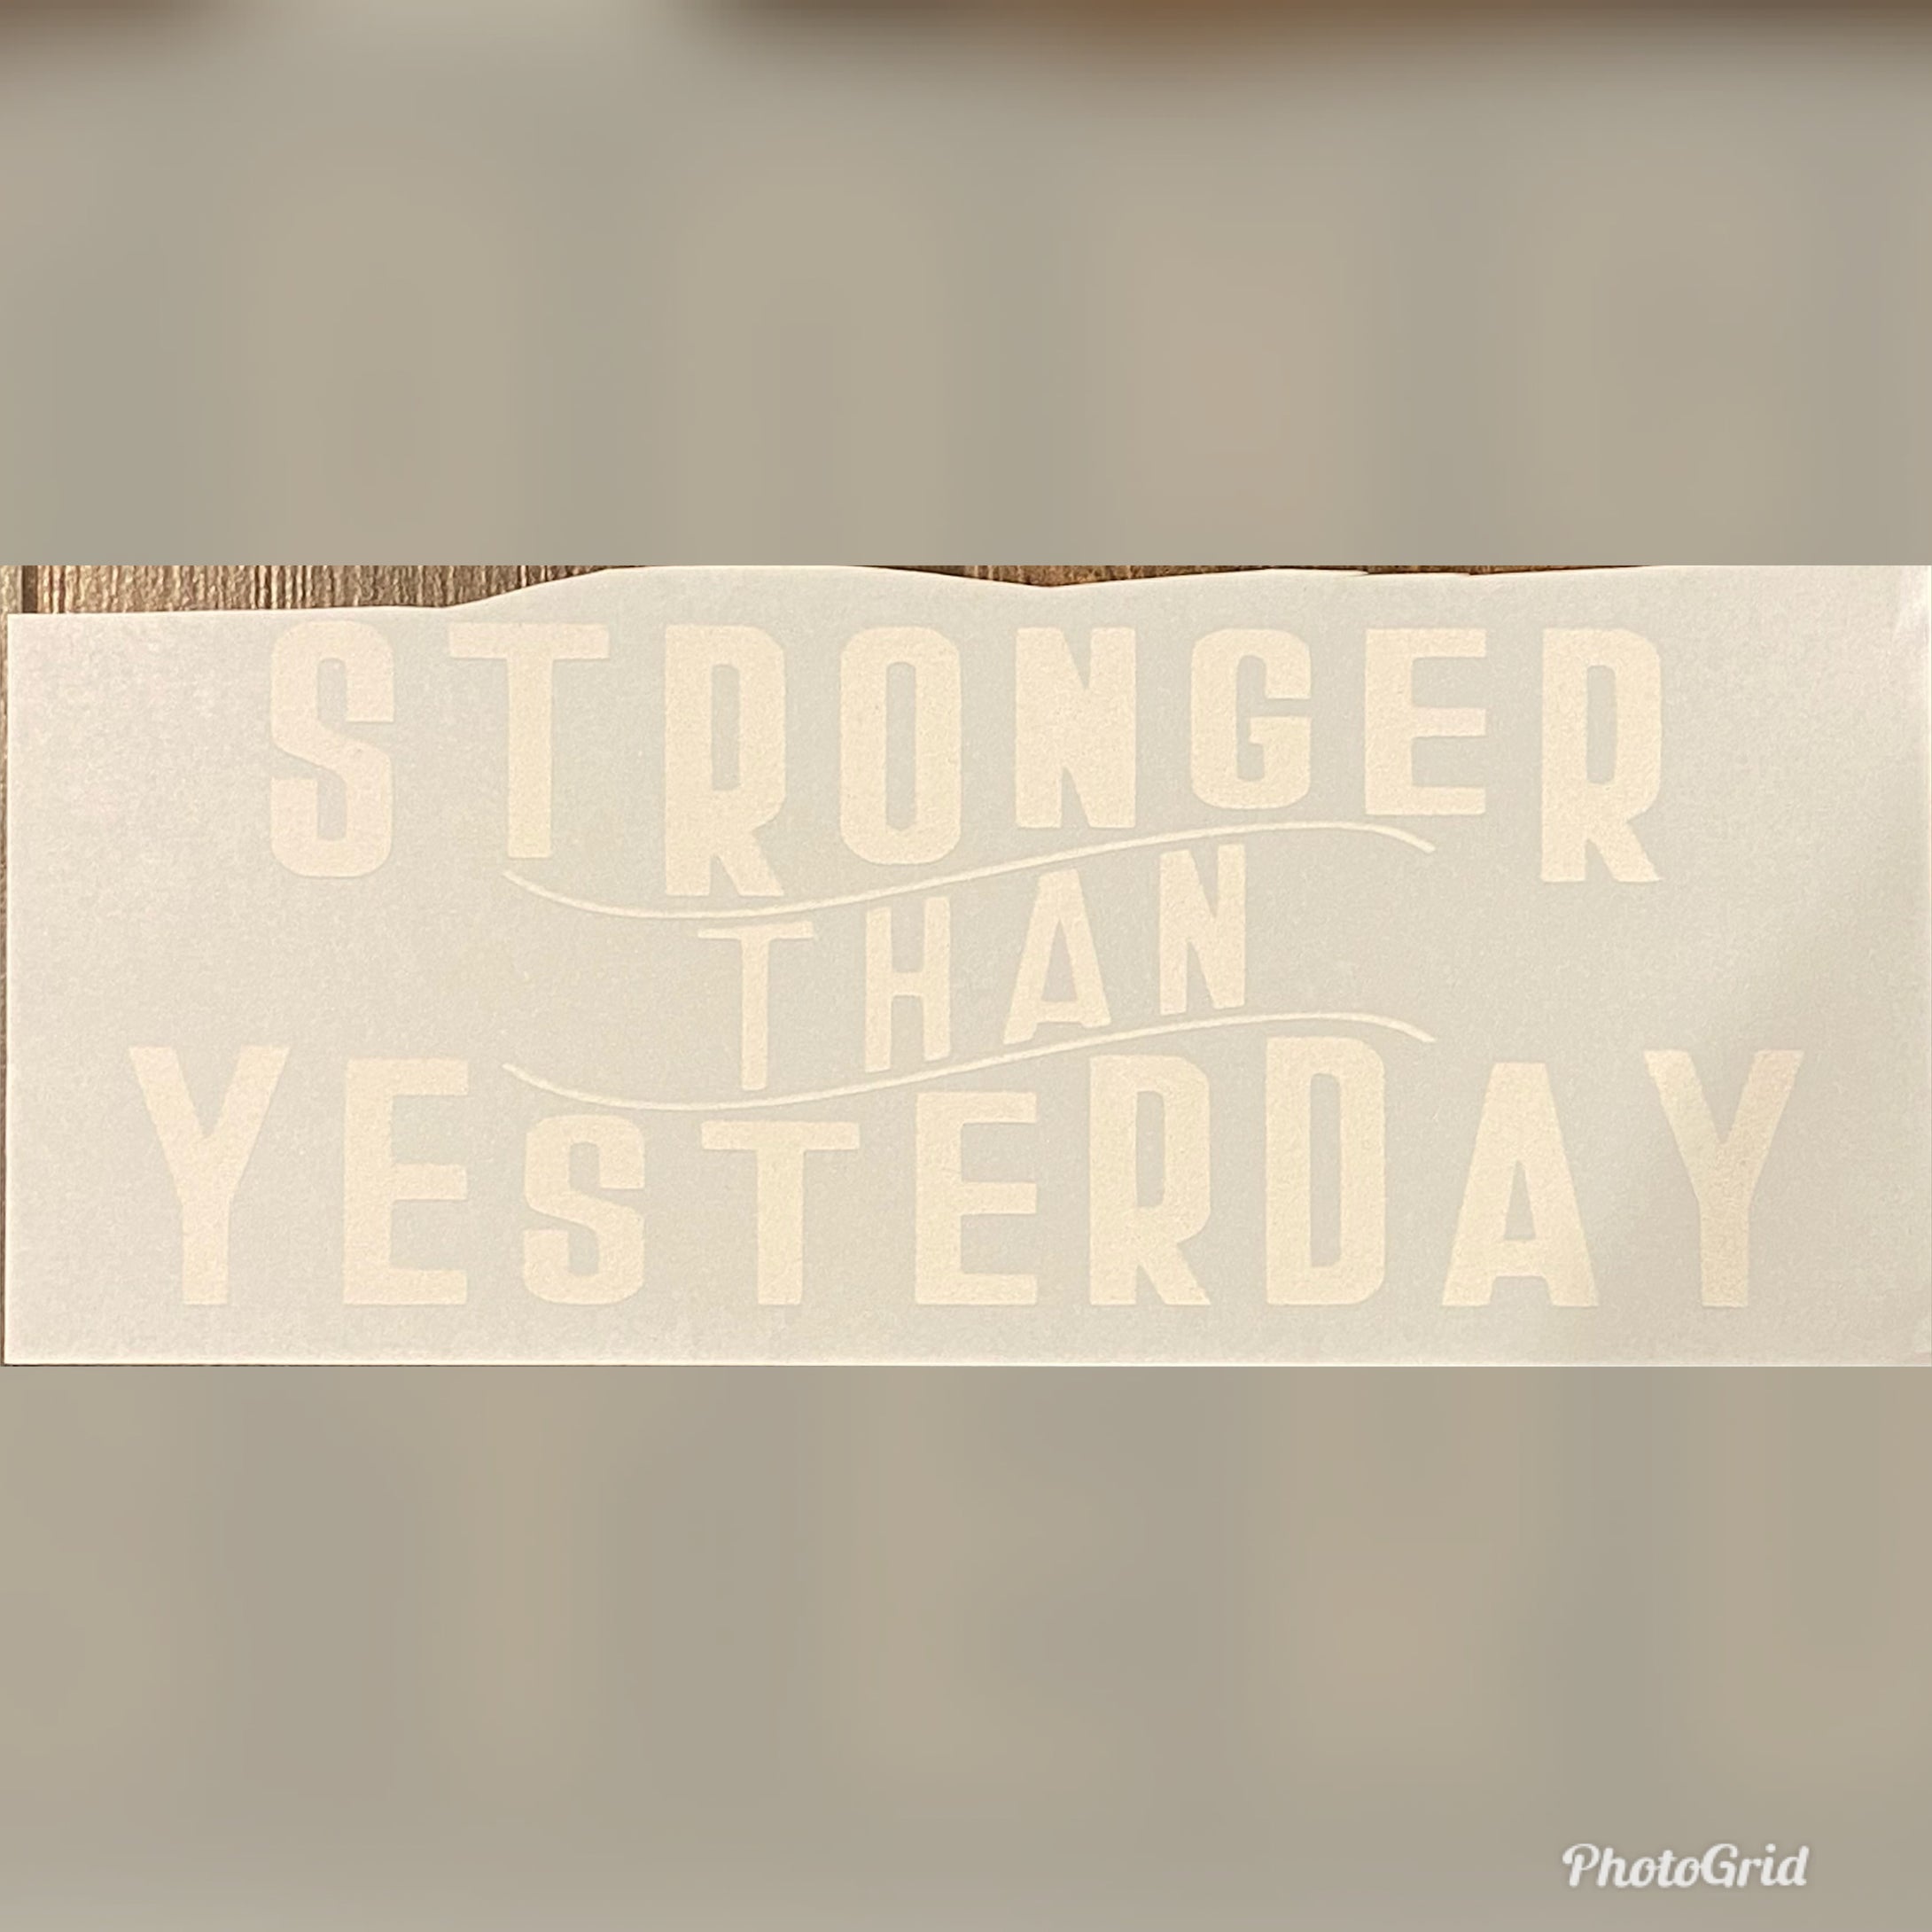 Stronger than yesterday